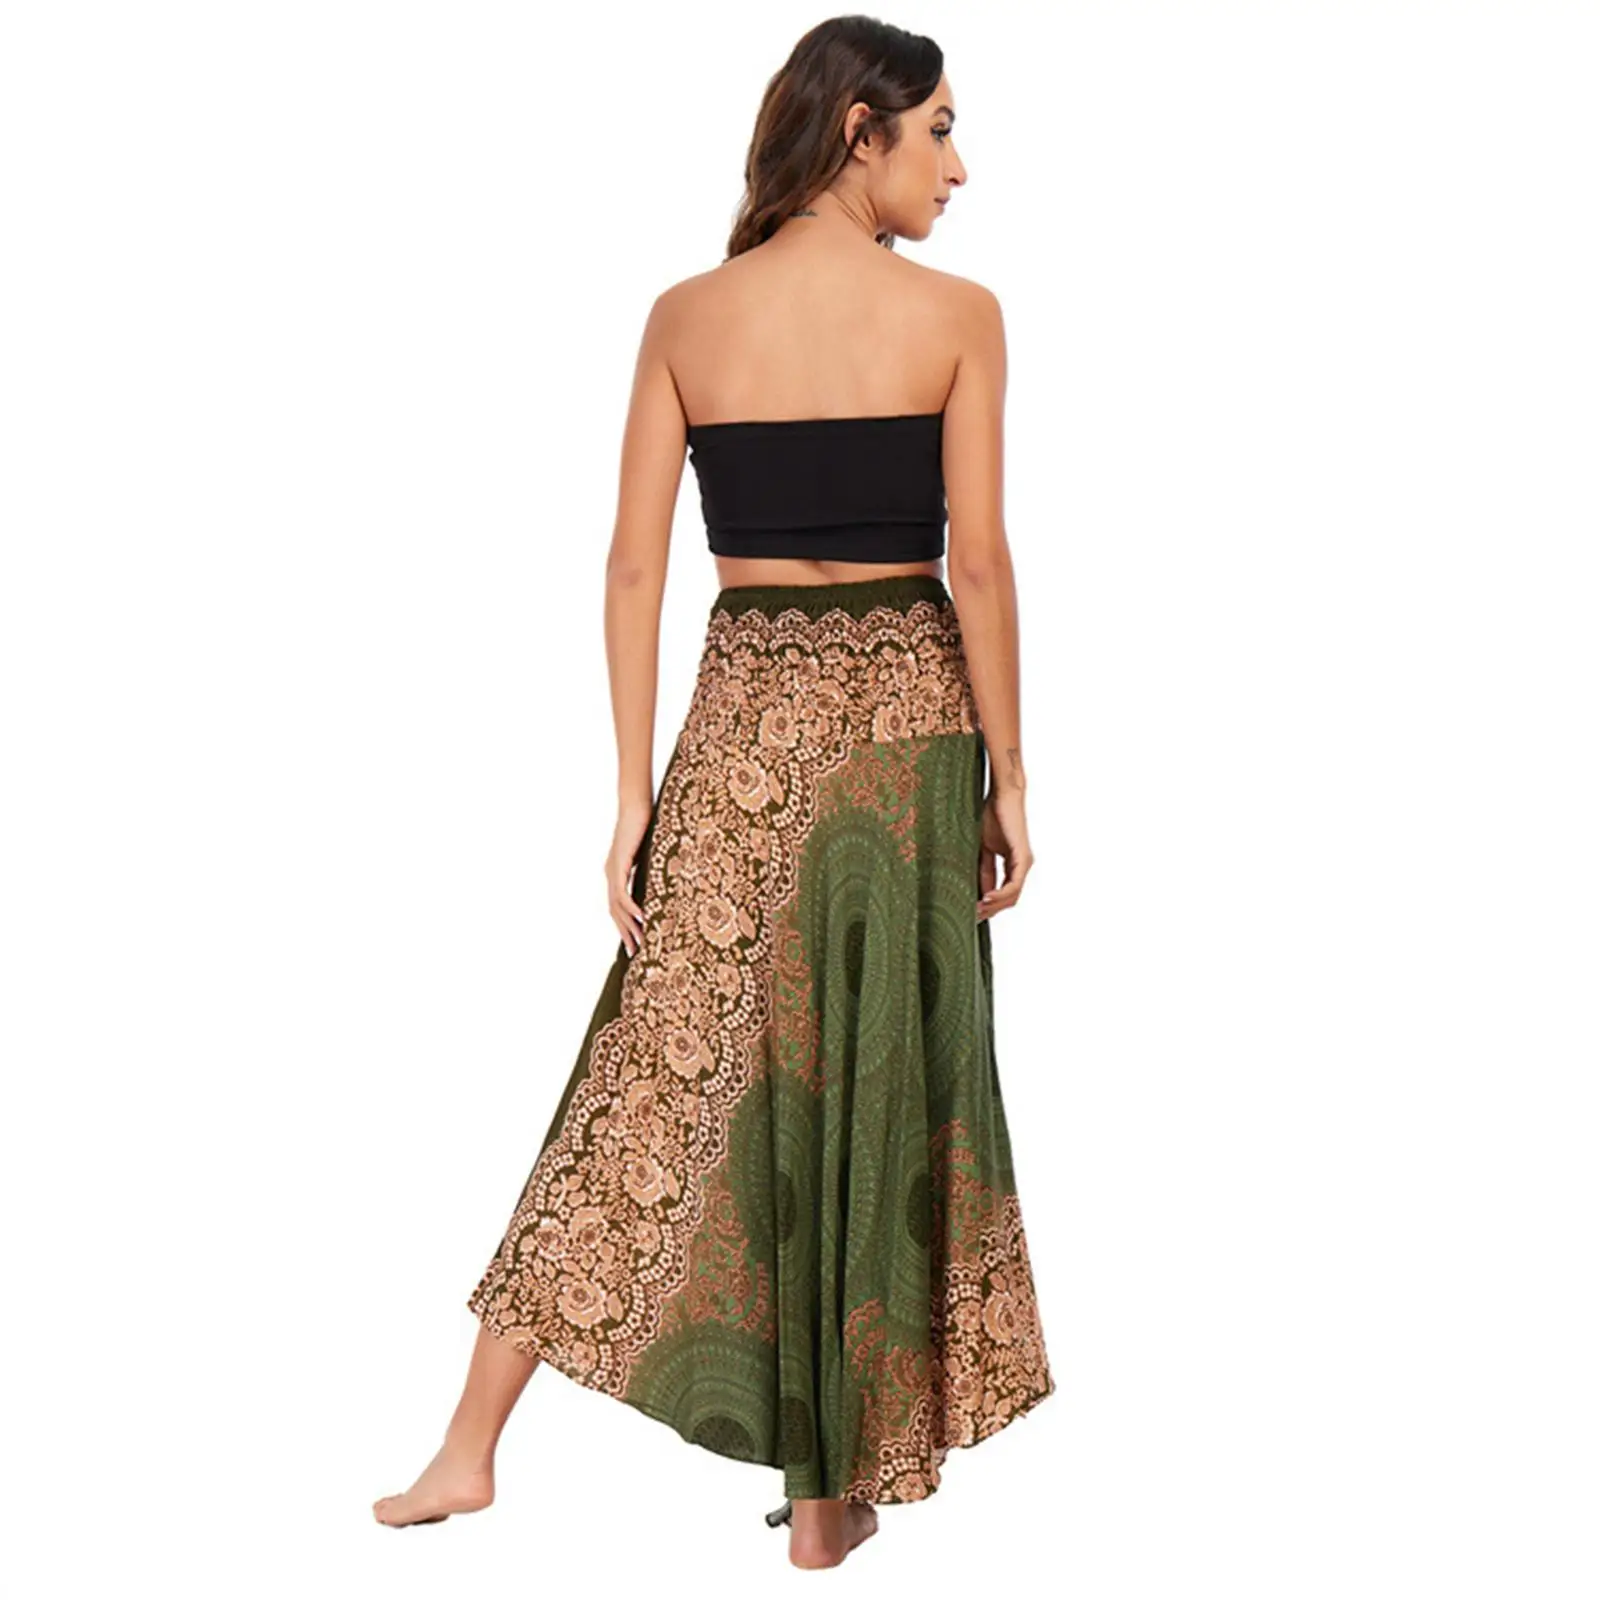 Fashion Boho Hippie Skirt Bohemian Printed Dancing Costume Gypsy for Women Adults Party Latin